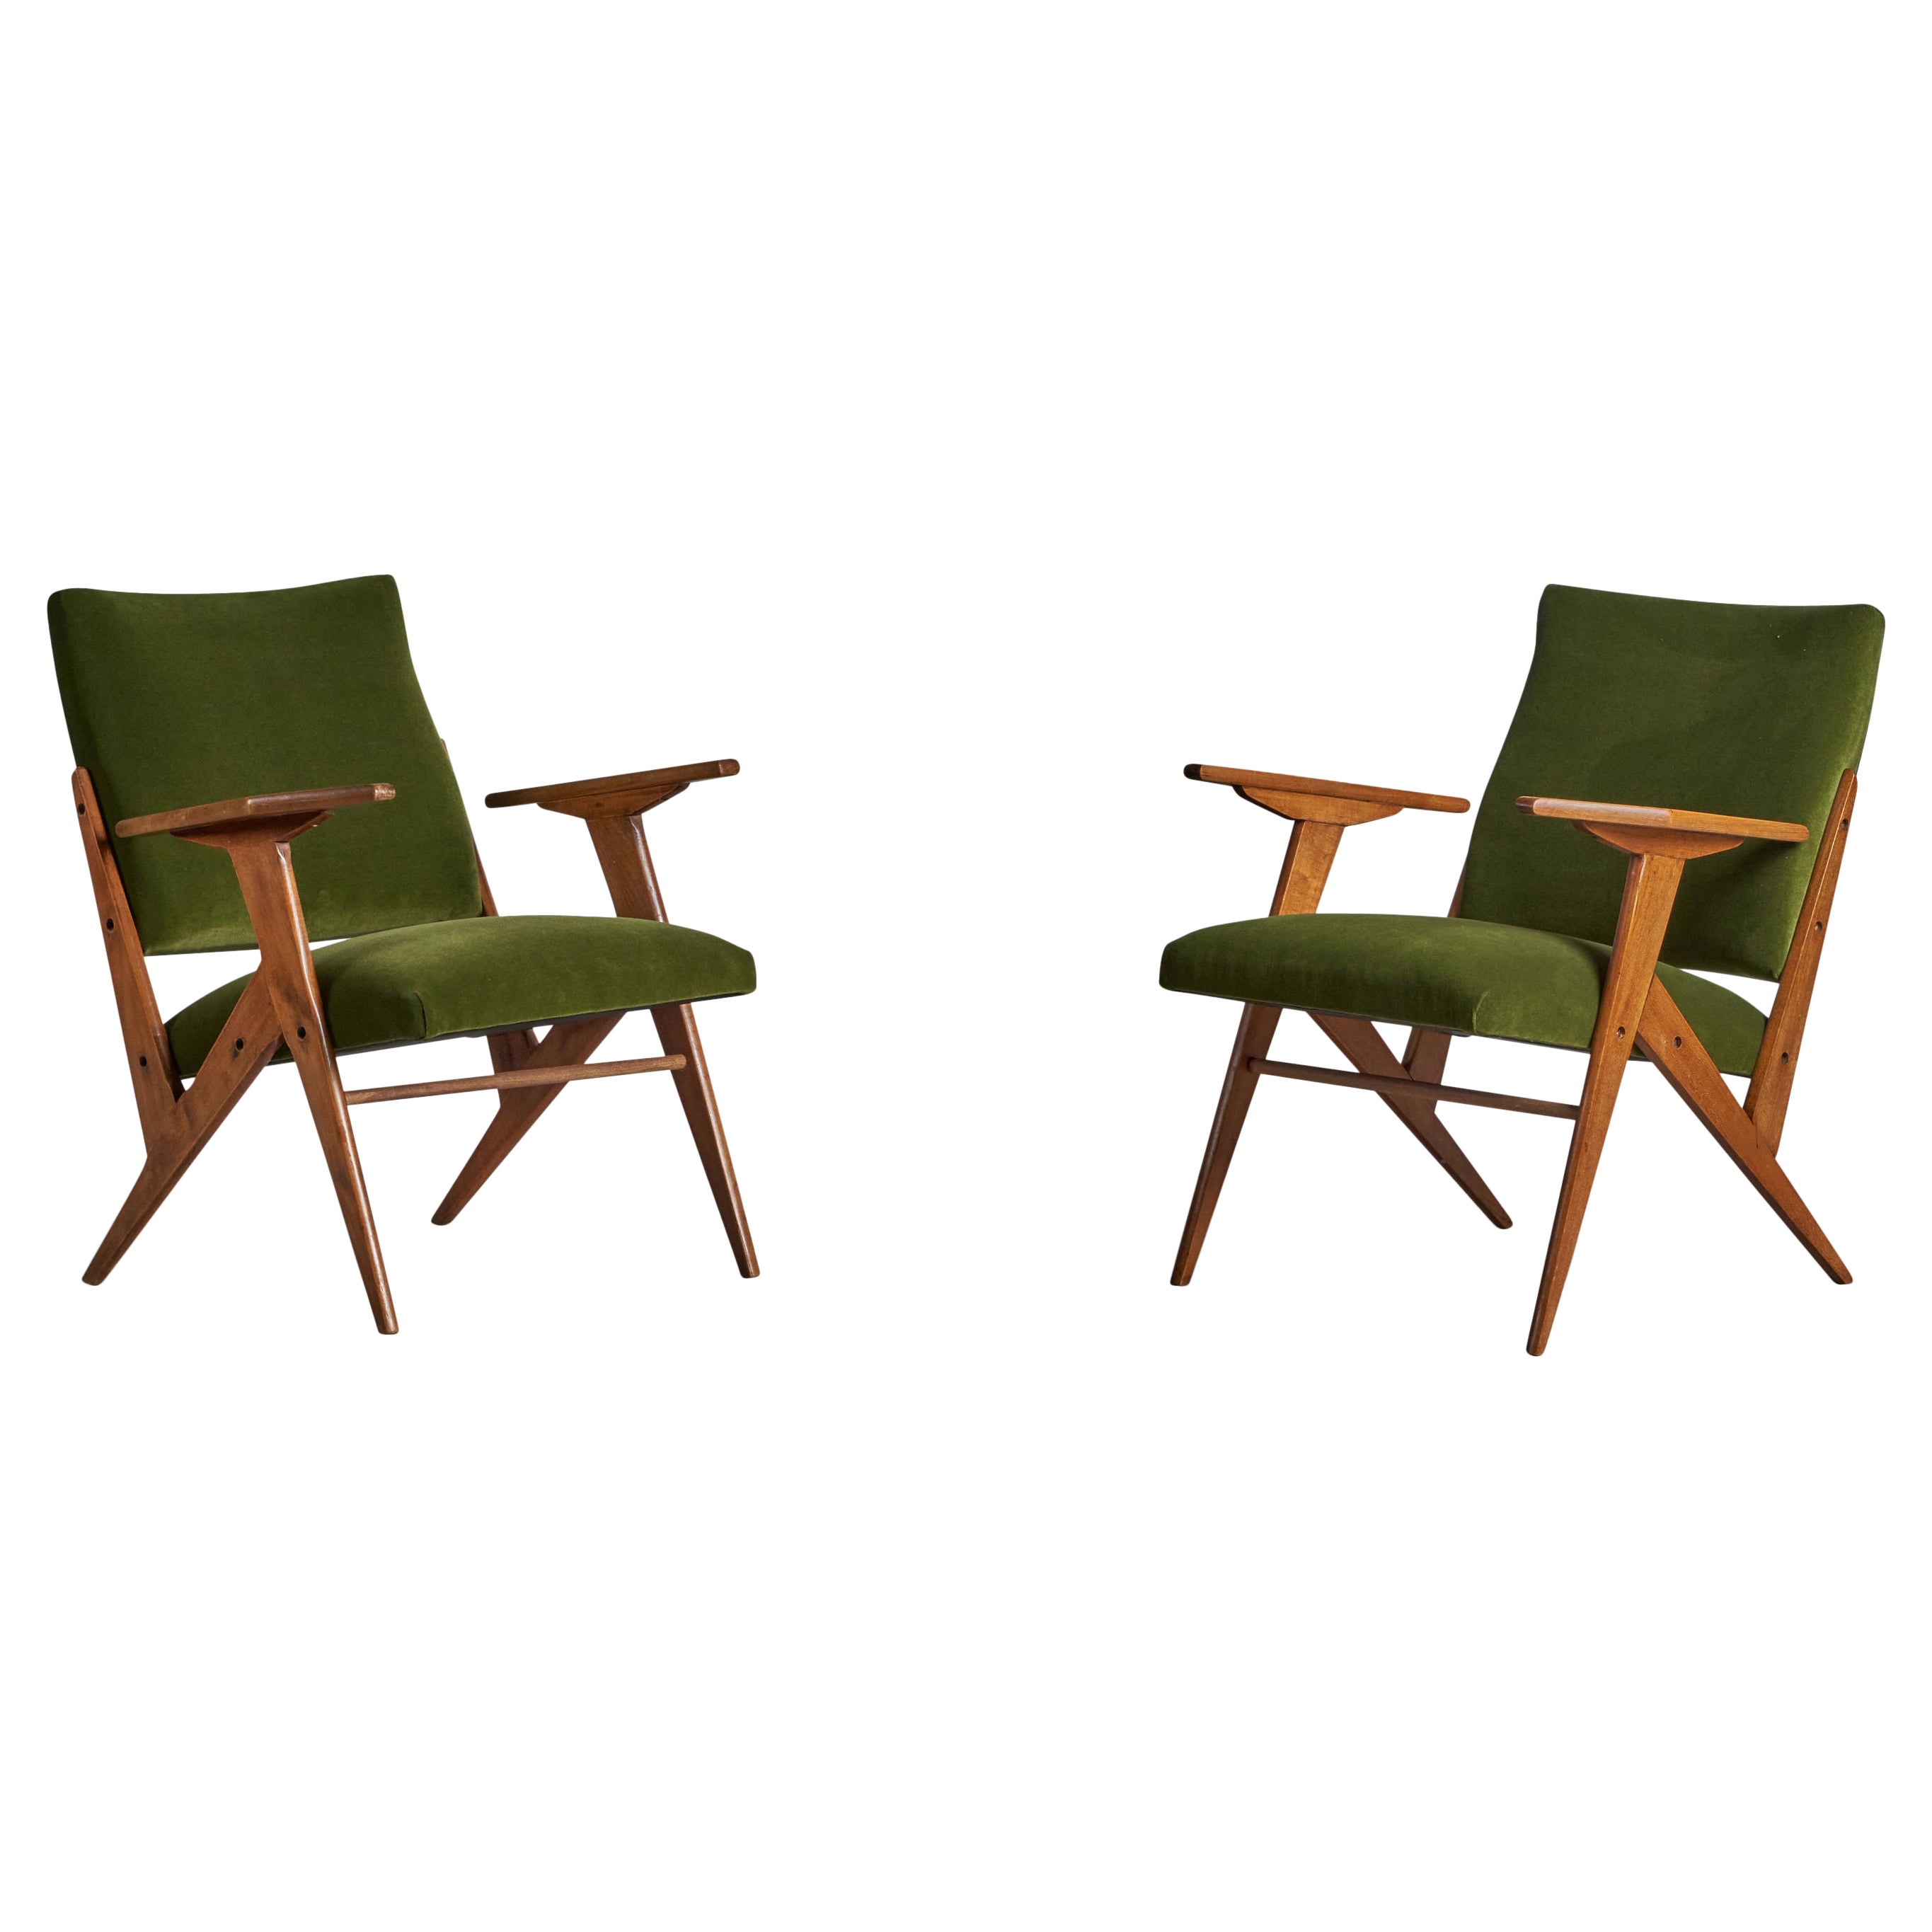 José Zanine Caldas, Lounge Chairs, Pau Marfim, Fabric, Brazil, 1950s For Sale